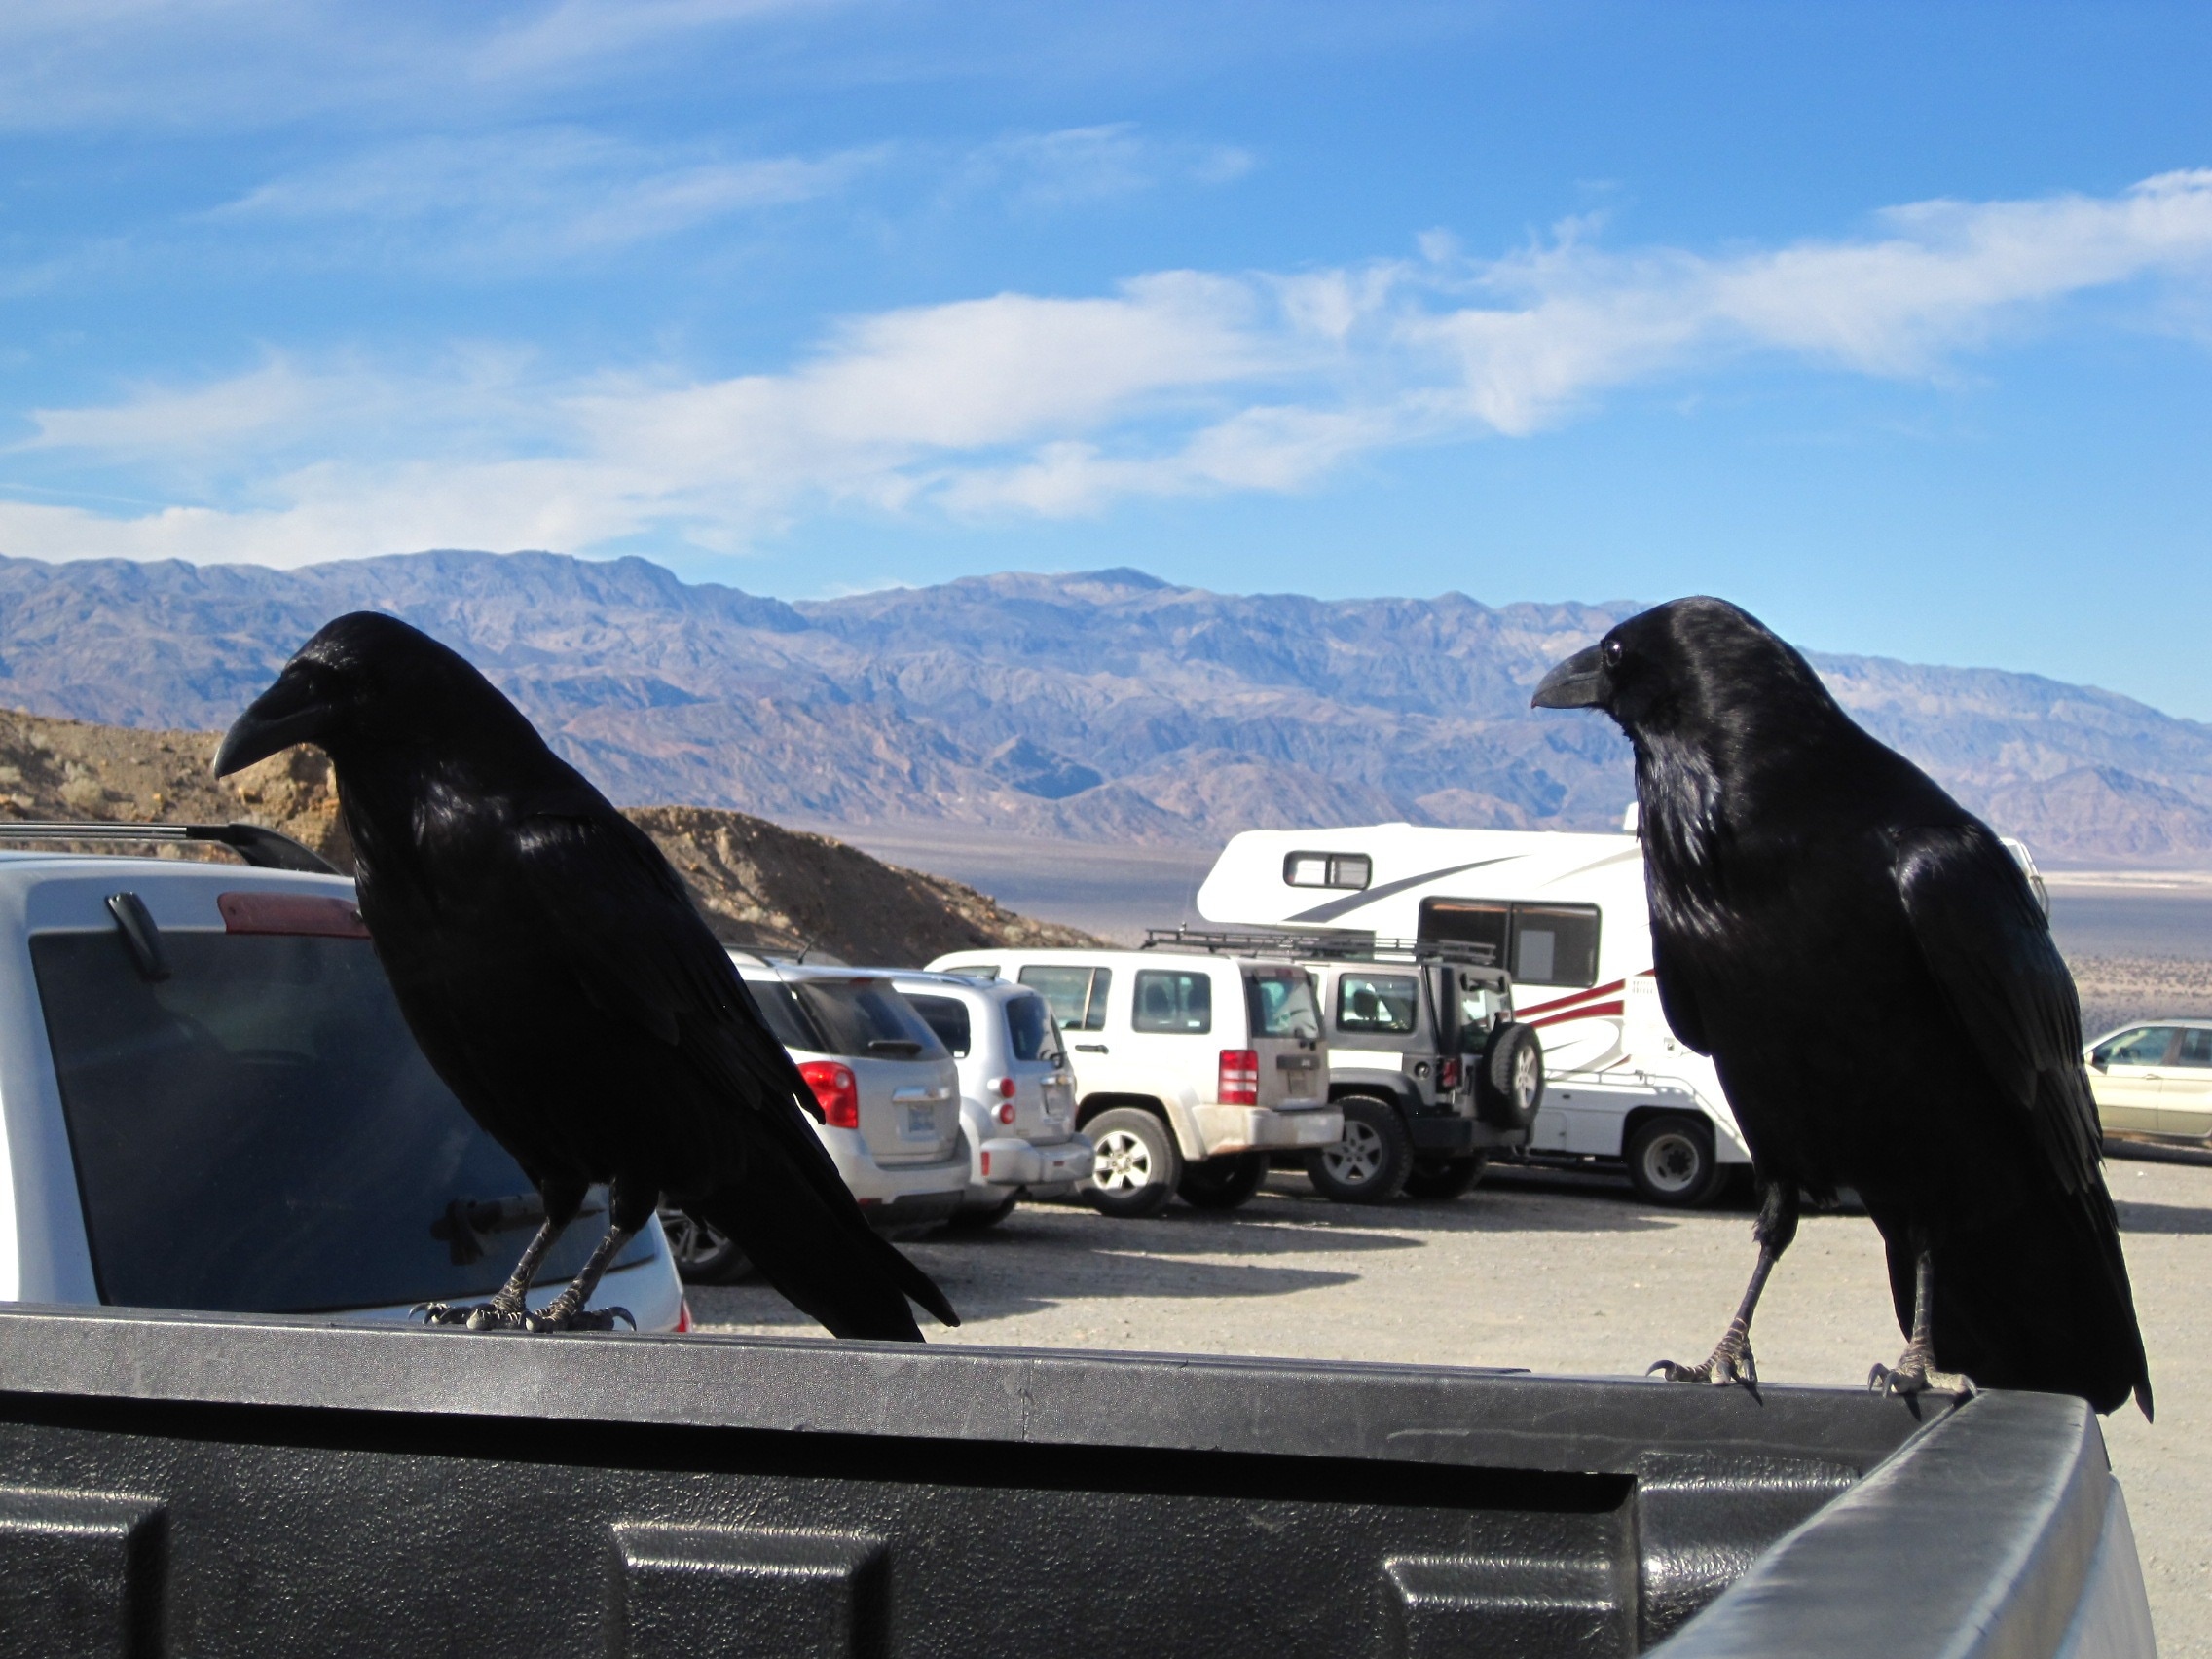 2 black crows